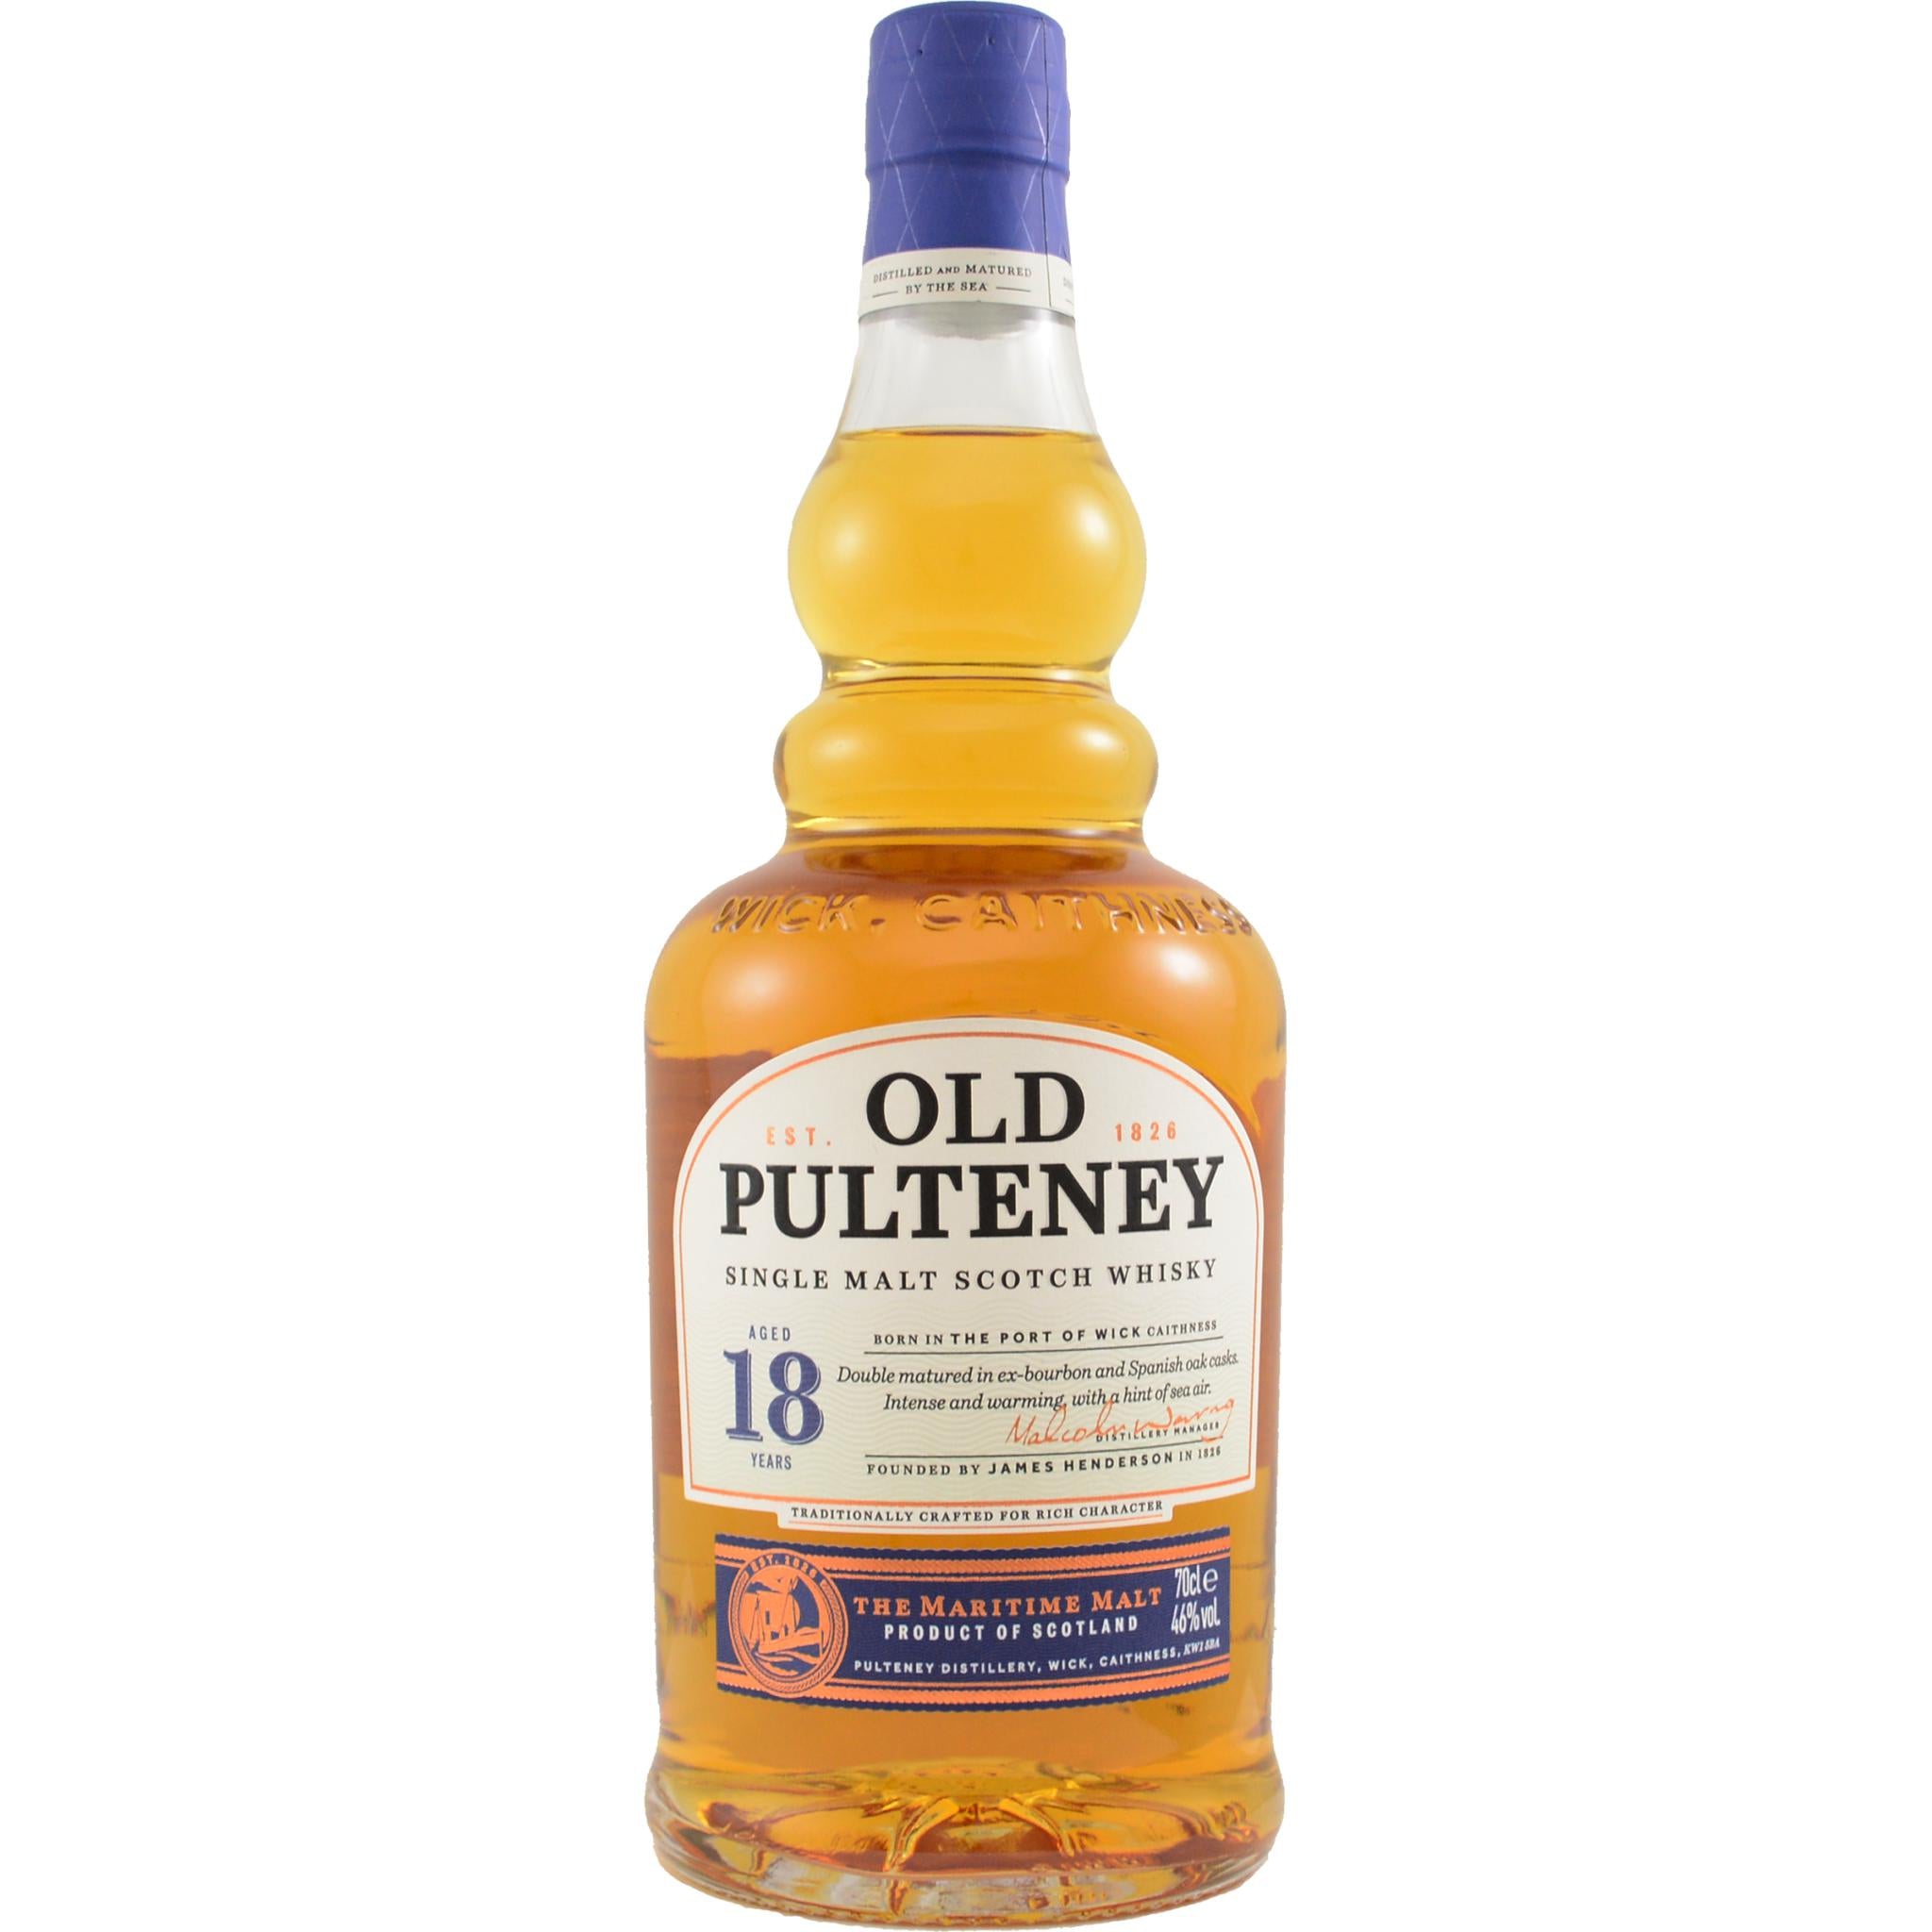 Old Pulteney Single Malt Scotch Whisky 18 Years Old